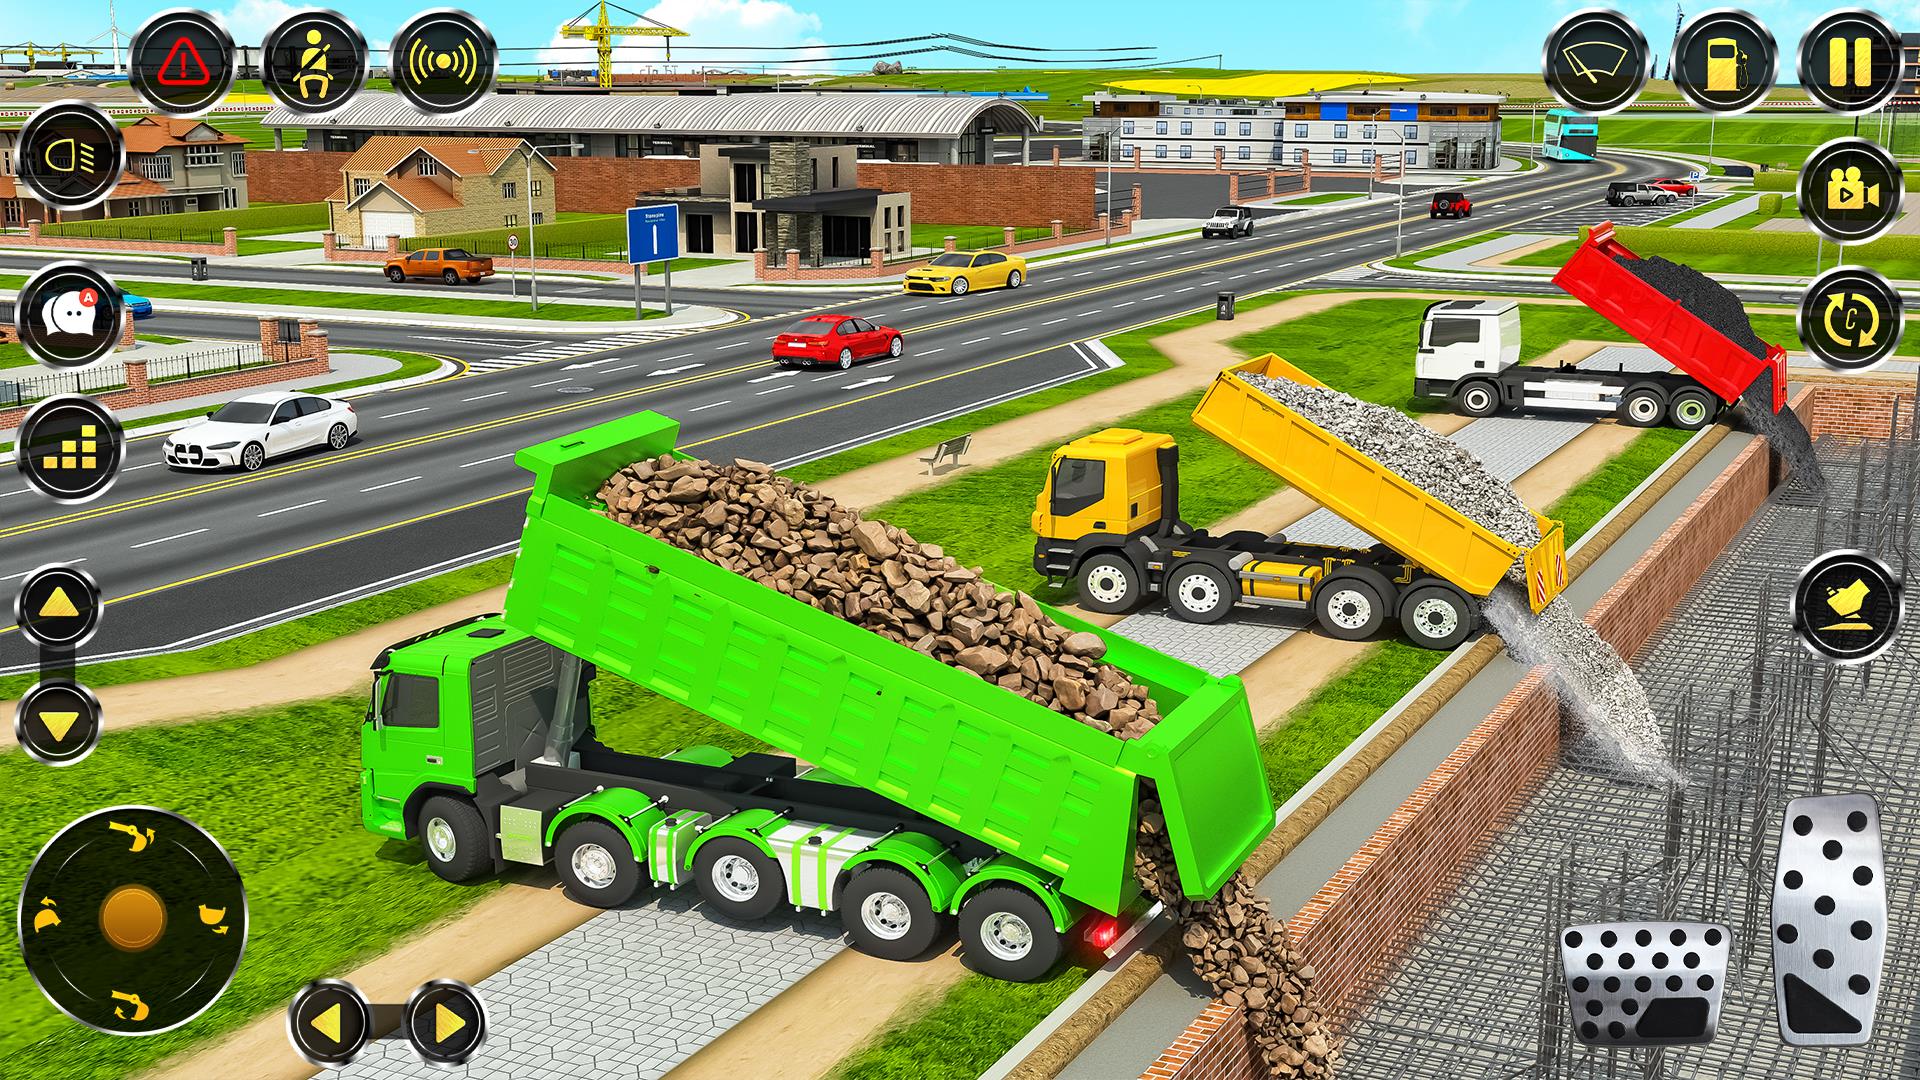 City Construction JCB Game 3D Screenshot 15